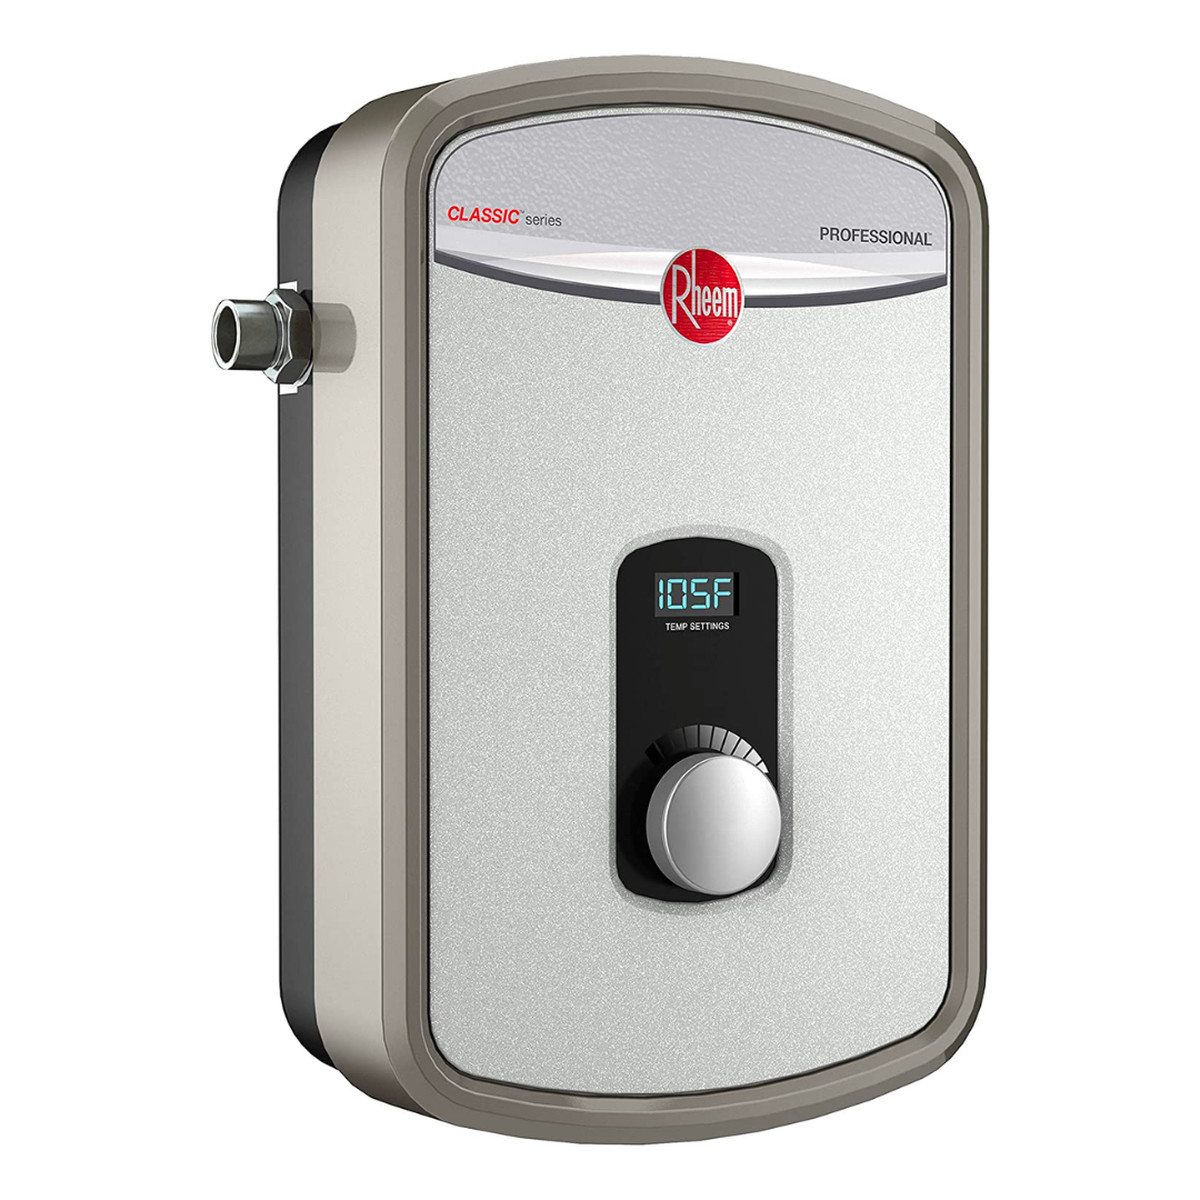 Silver Rheem tankless electric water heater